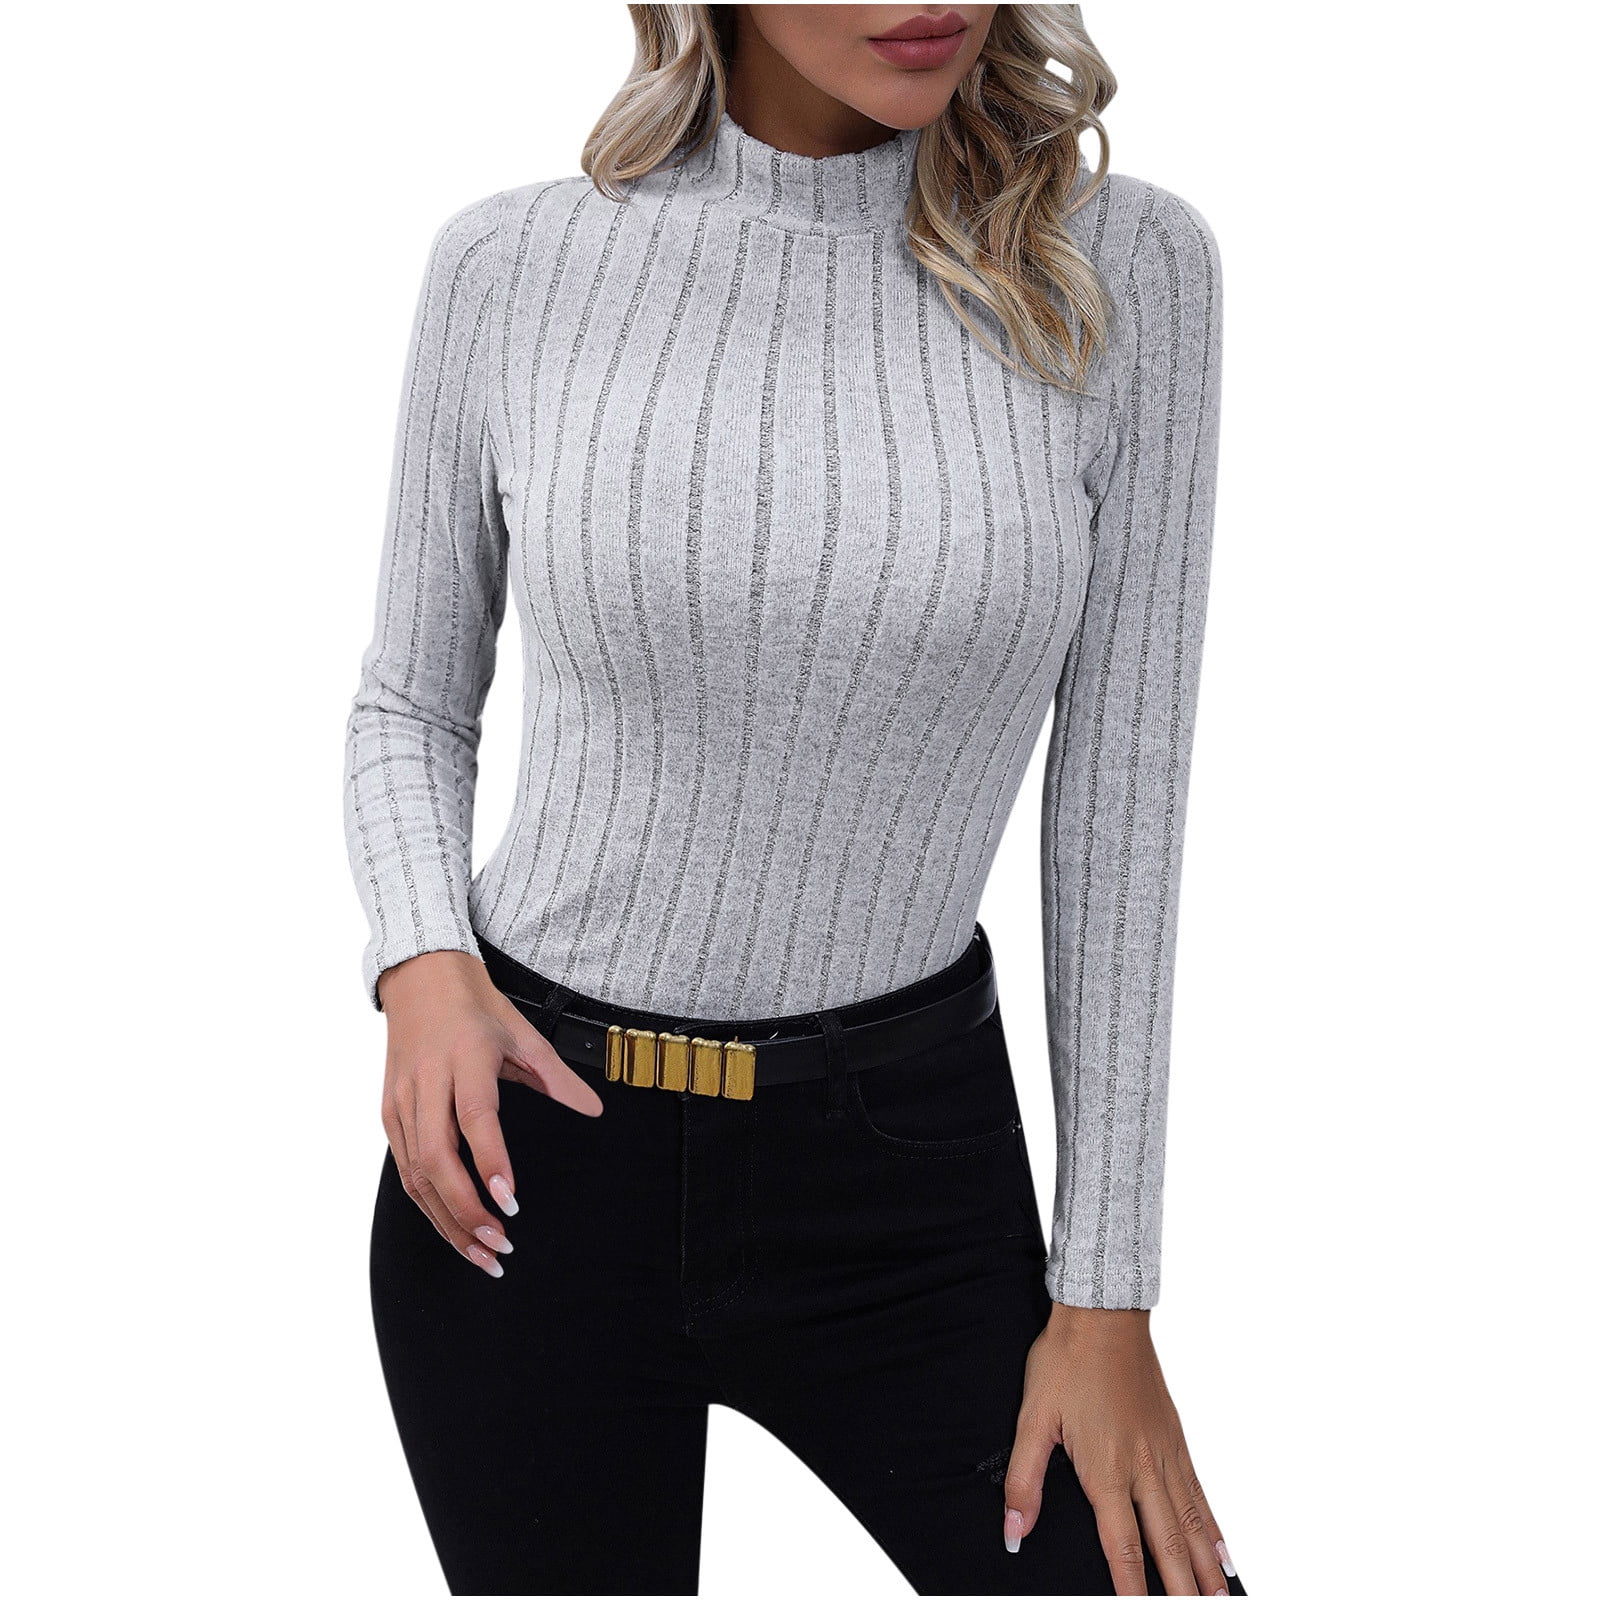 Elainilye Fashion Women T Shirt Henley Solid Print Button Loose Long Sleeve  Tops Hooded Sweatshirts 